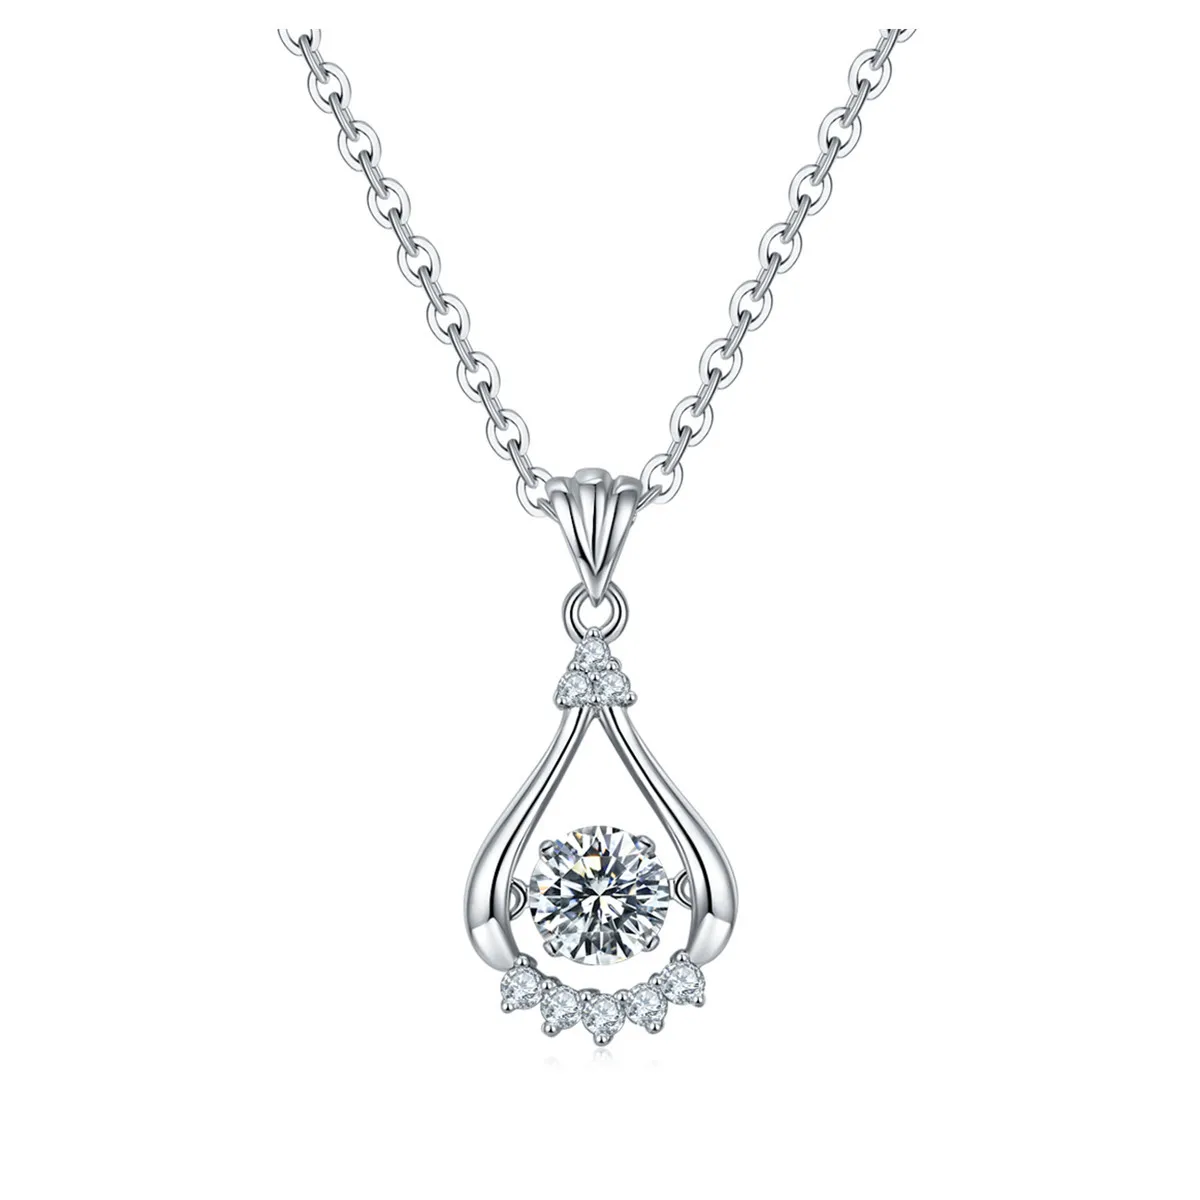 

2021 european fashion beautiful water drop pendant 925 silver 0.5ct moissanite women jewelry diamond necklace, Picture shows